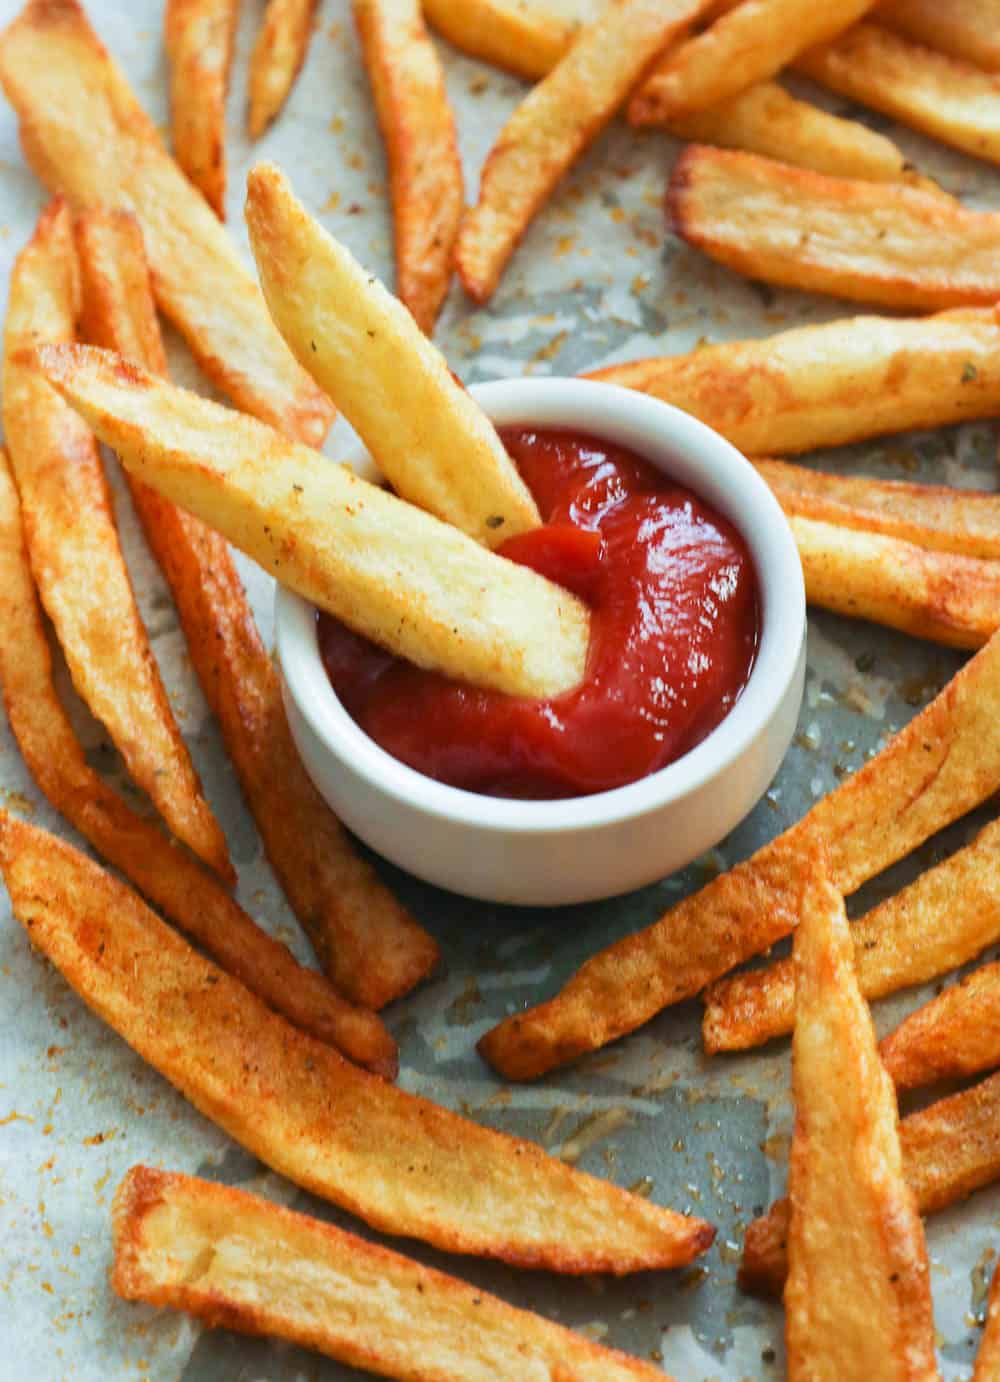 two seasoned fries dipped in ketchup